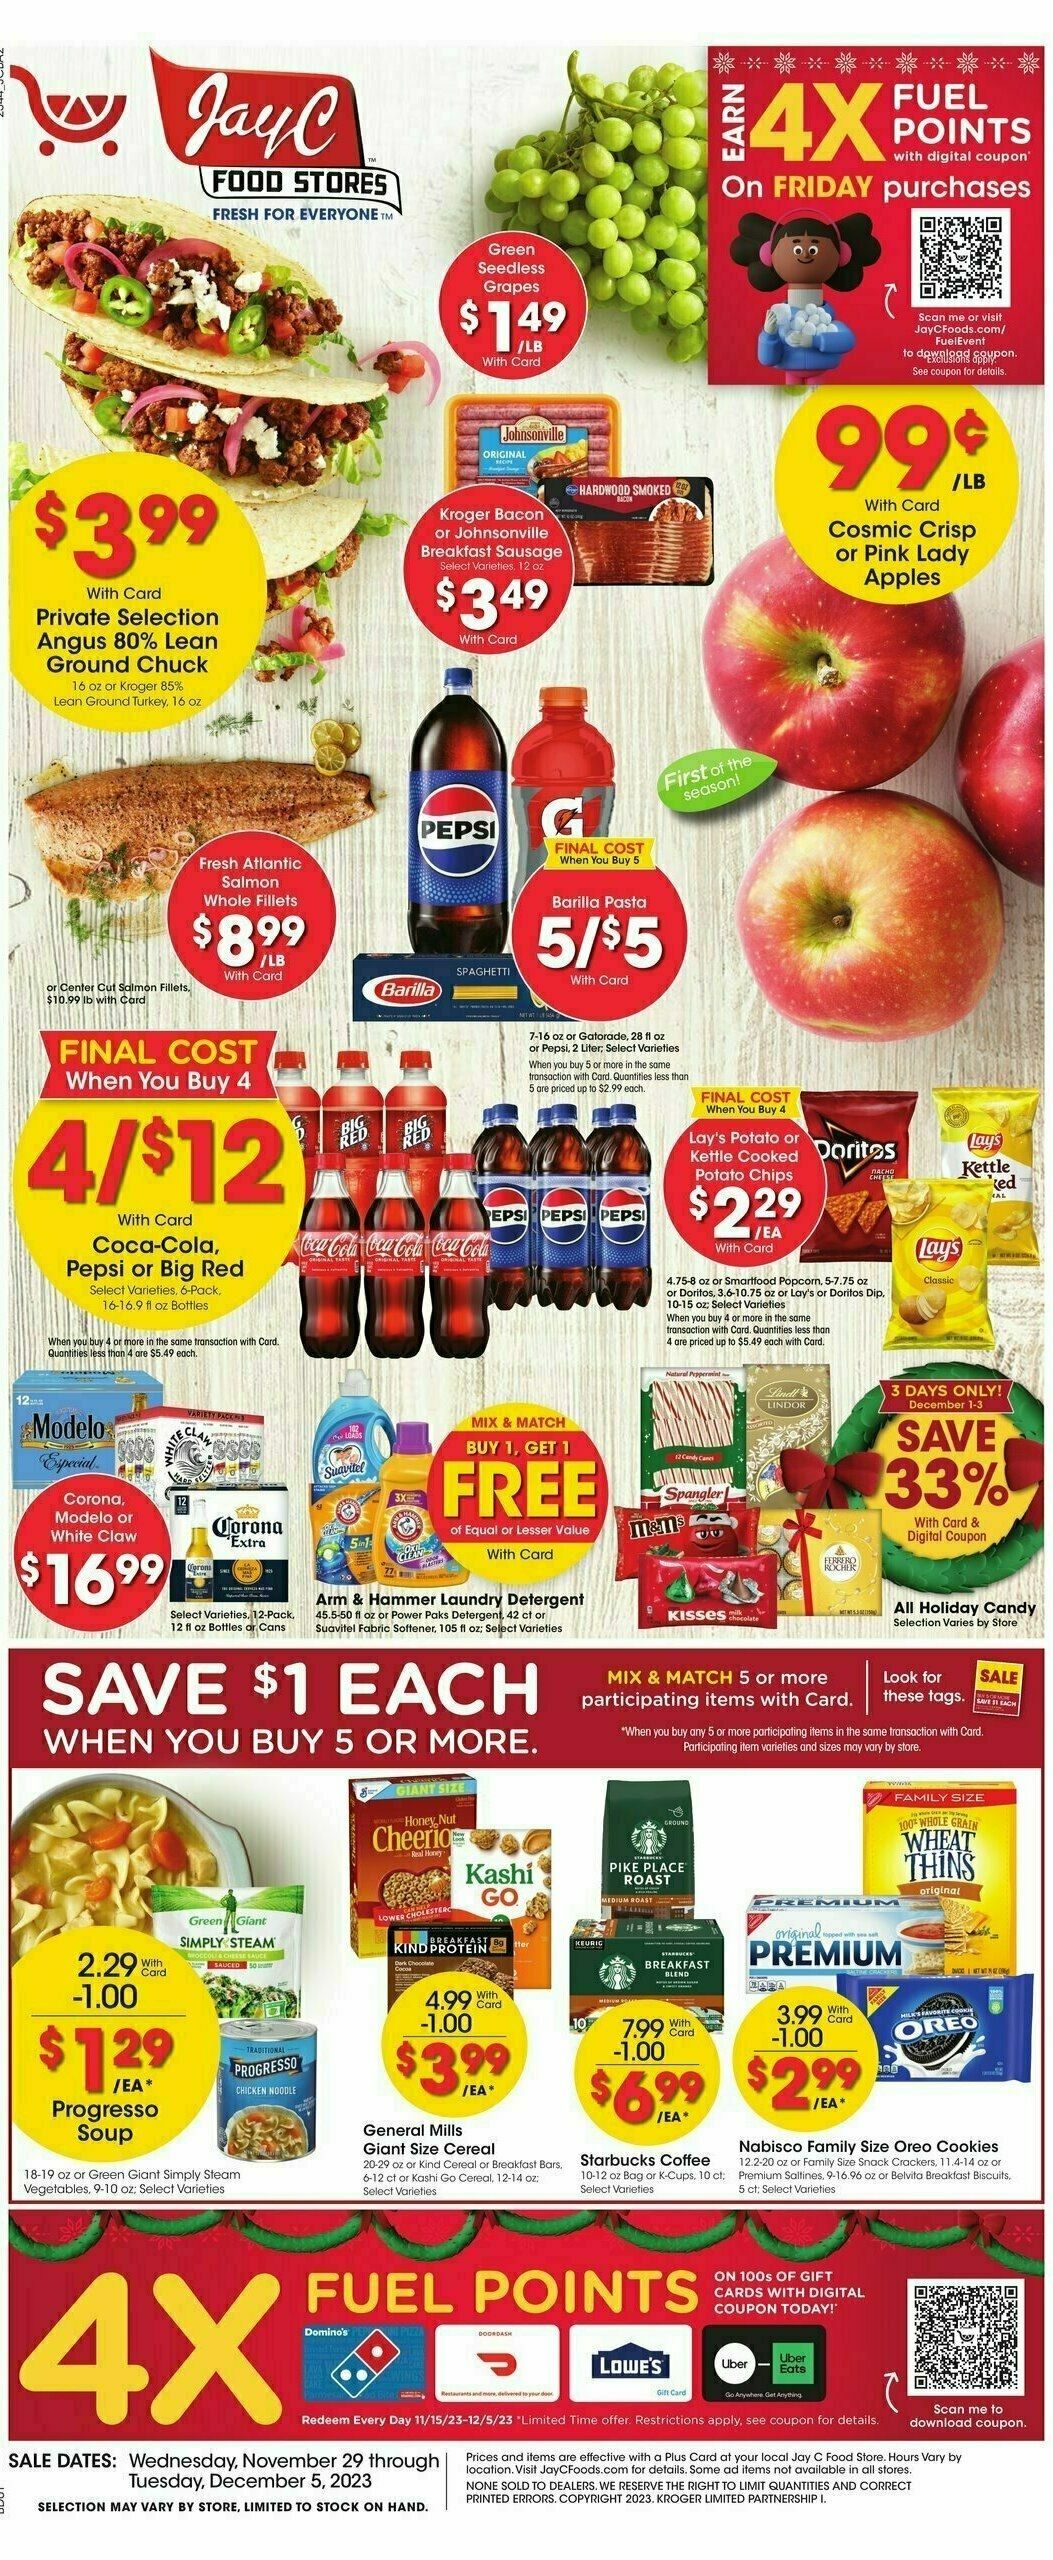 Jay C Food Weekly Ad from November 29